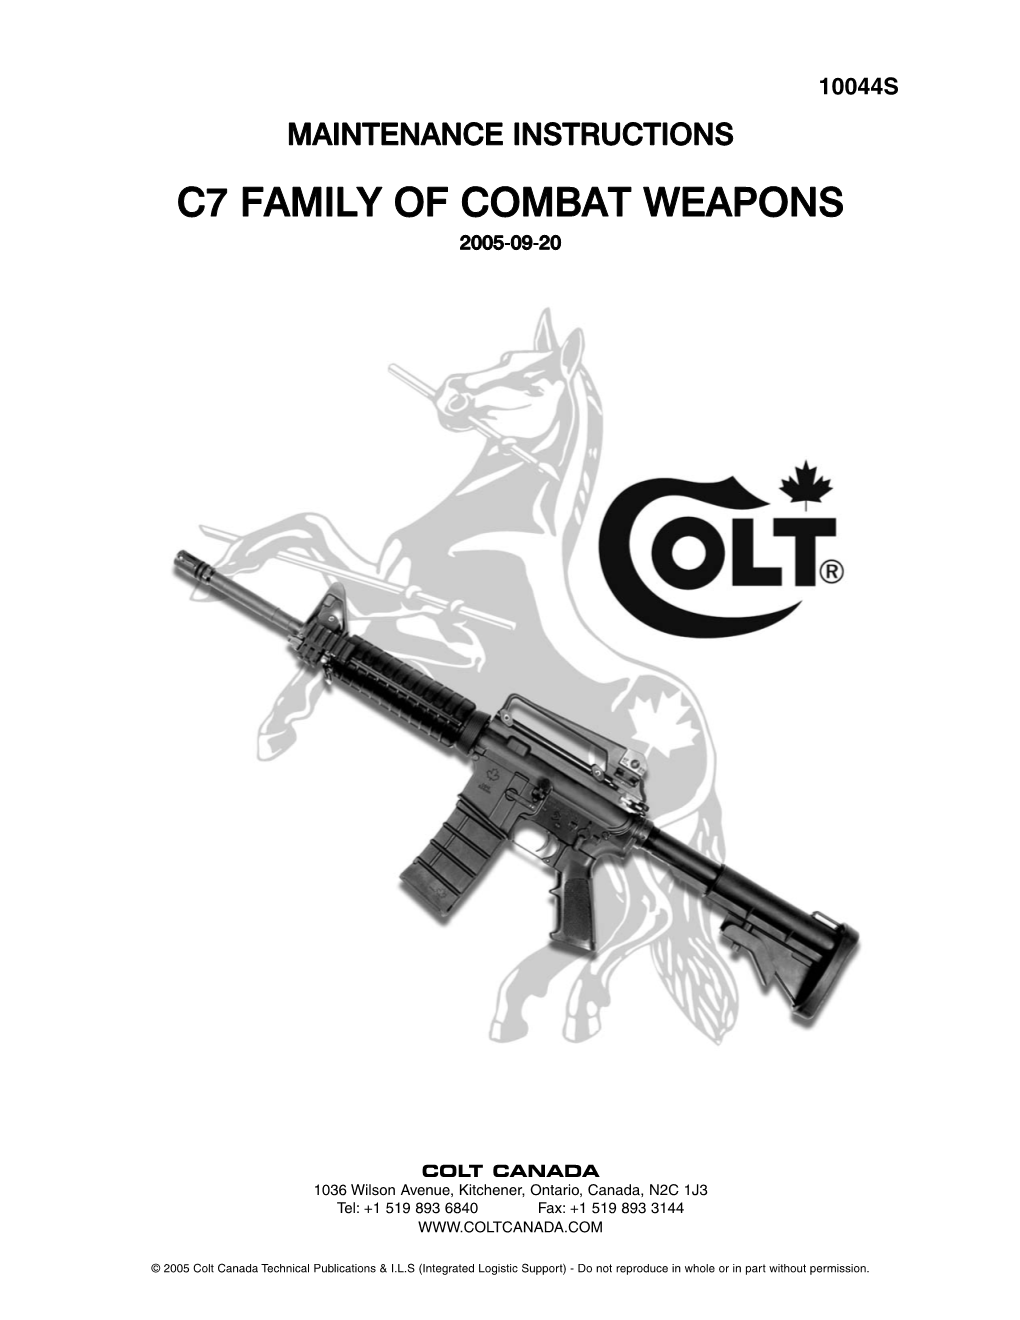 C7 Family of Combat Weapons 2005-009-220